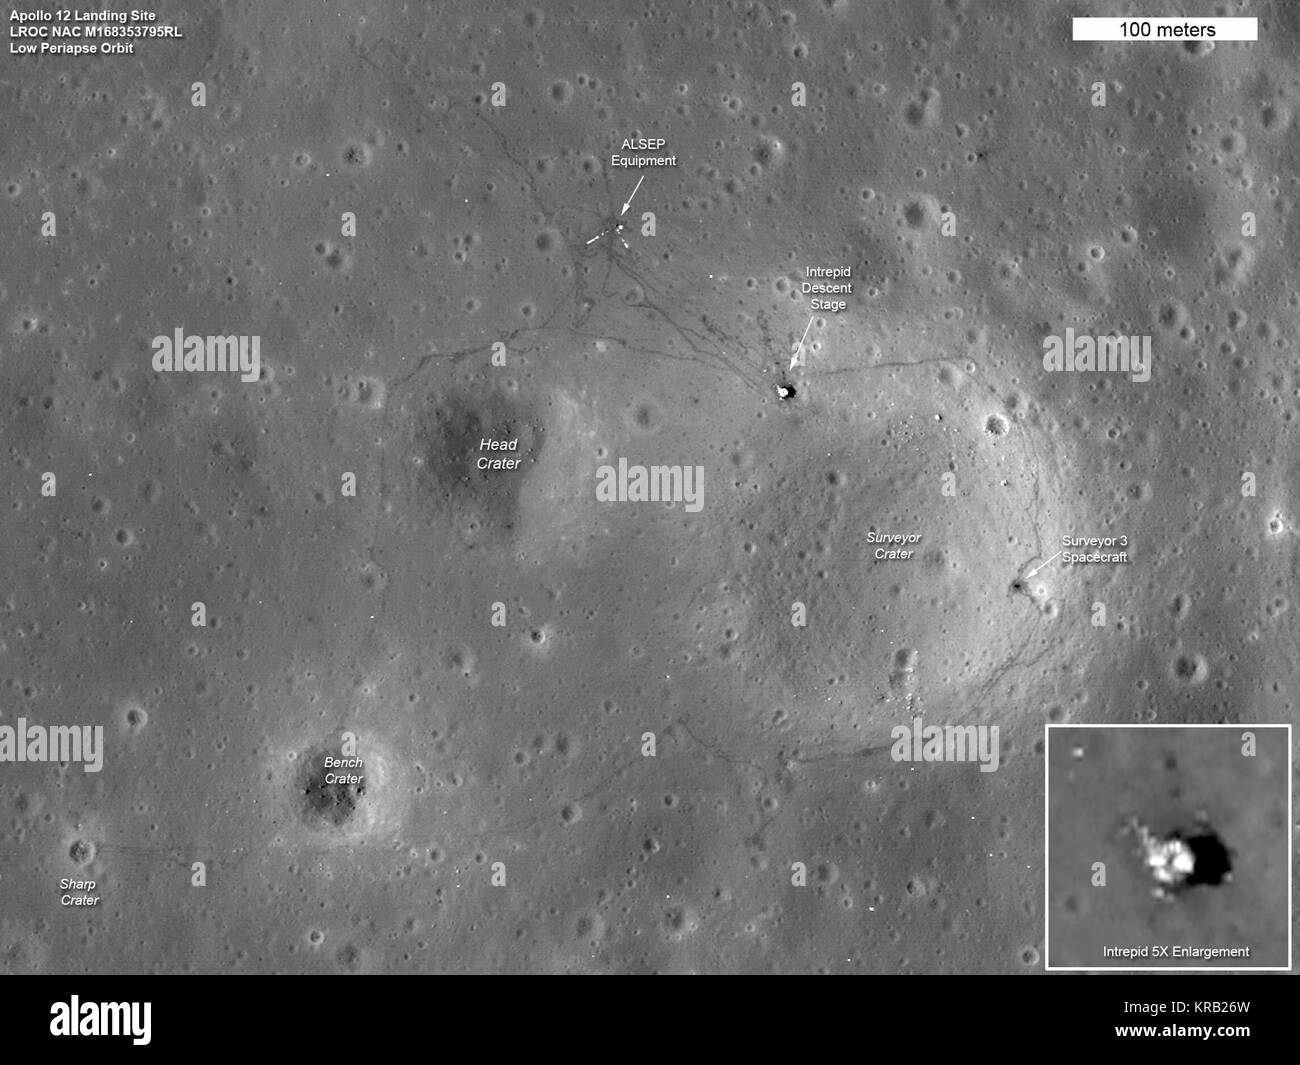 Apollo 12 landing site imaged by LRO, 2011 Stock Photo